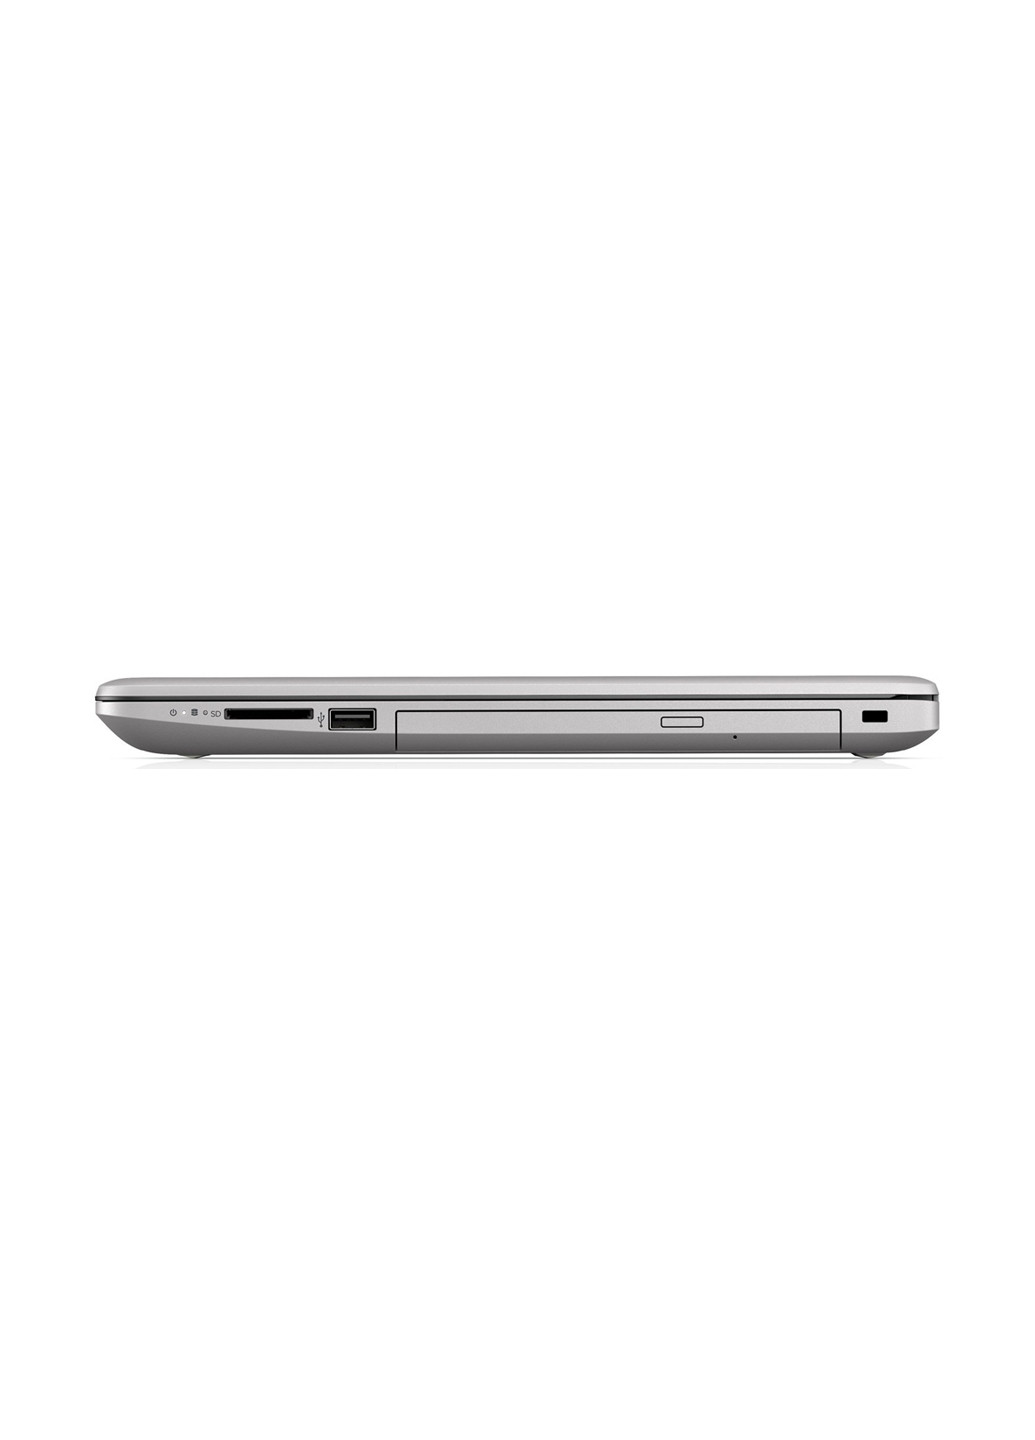 Ноутбук HP 250 g7 (6bp52ea) silver (136402424)